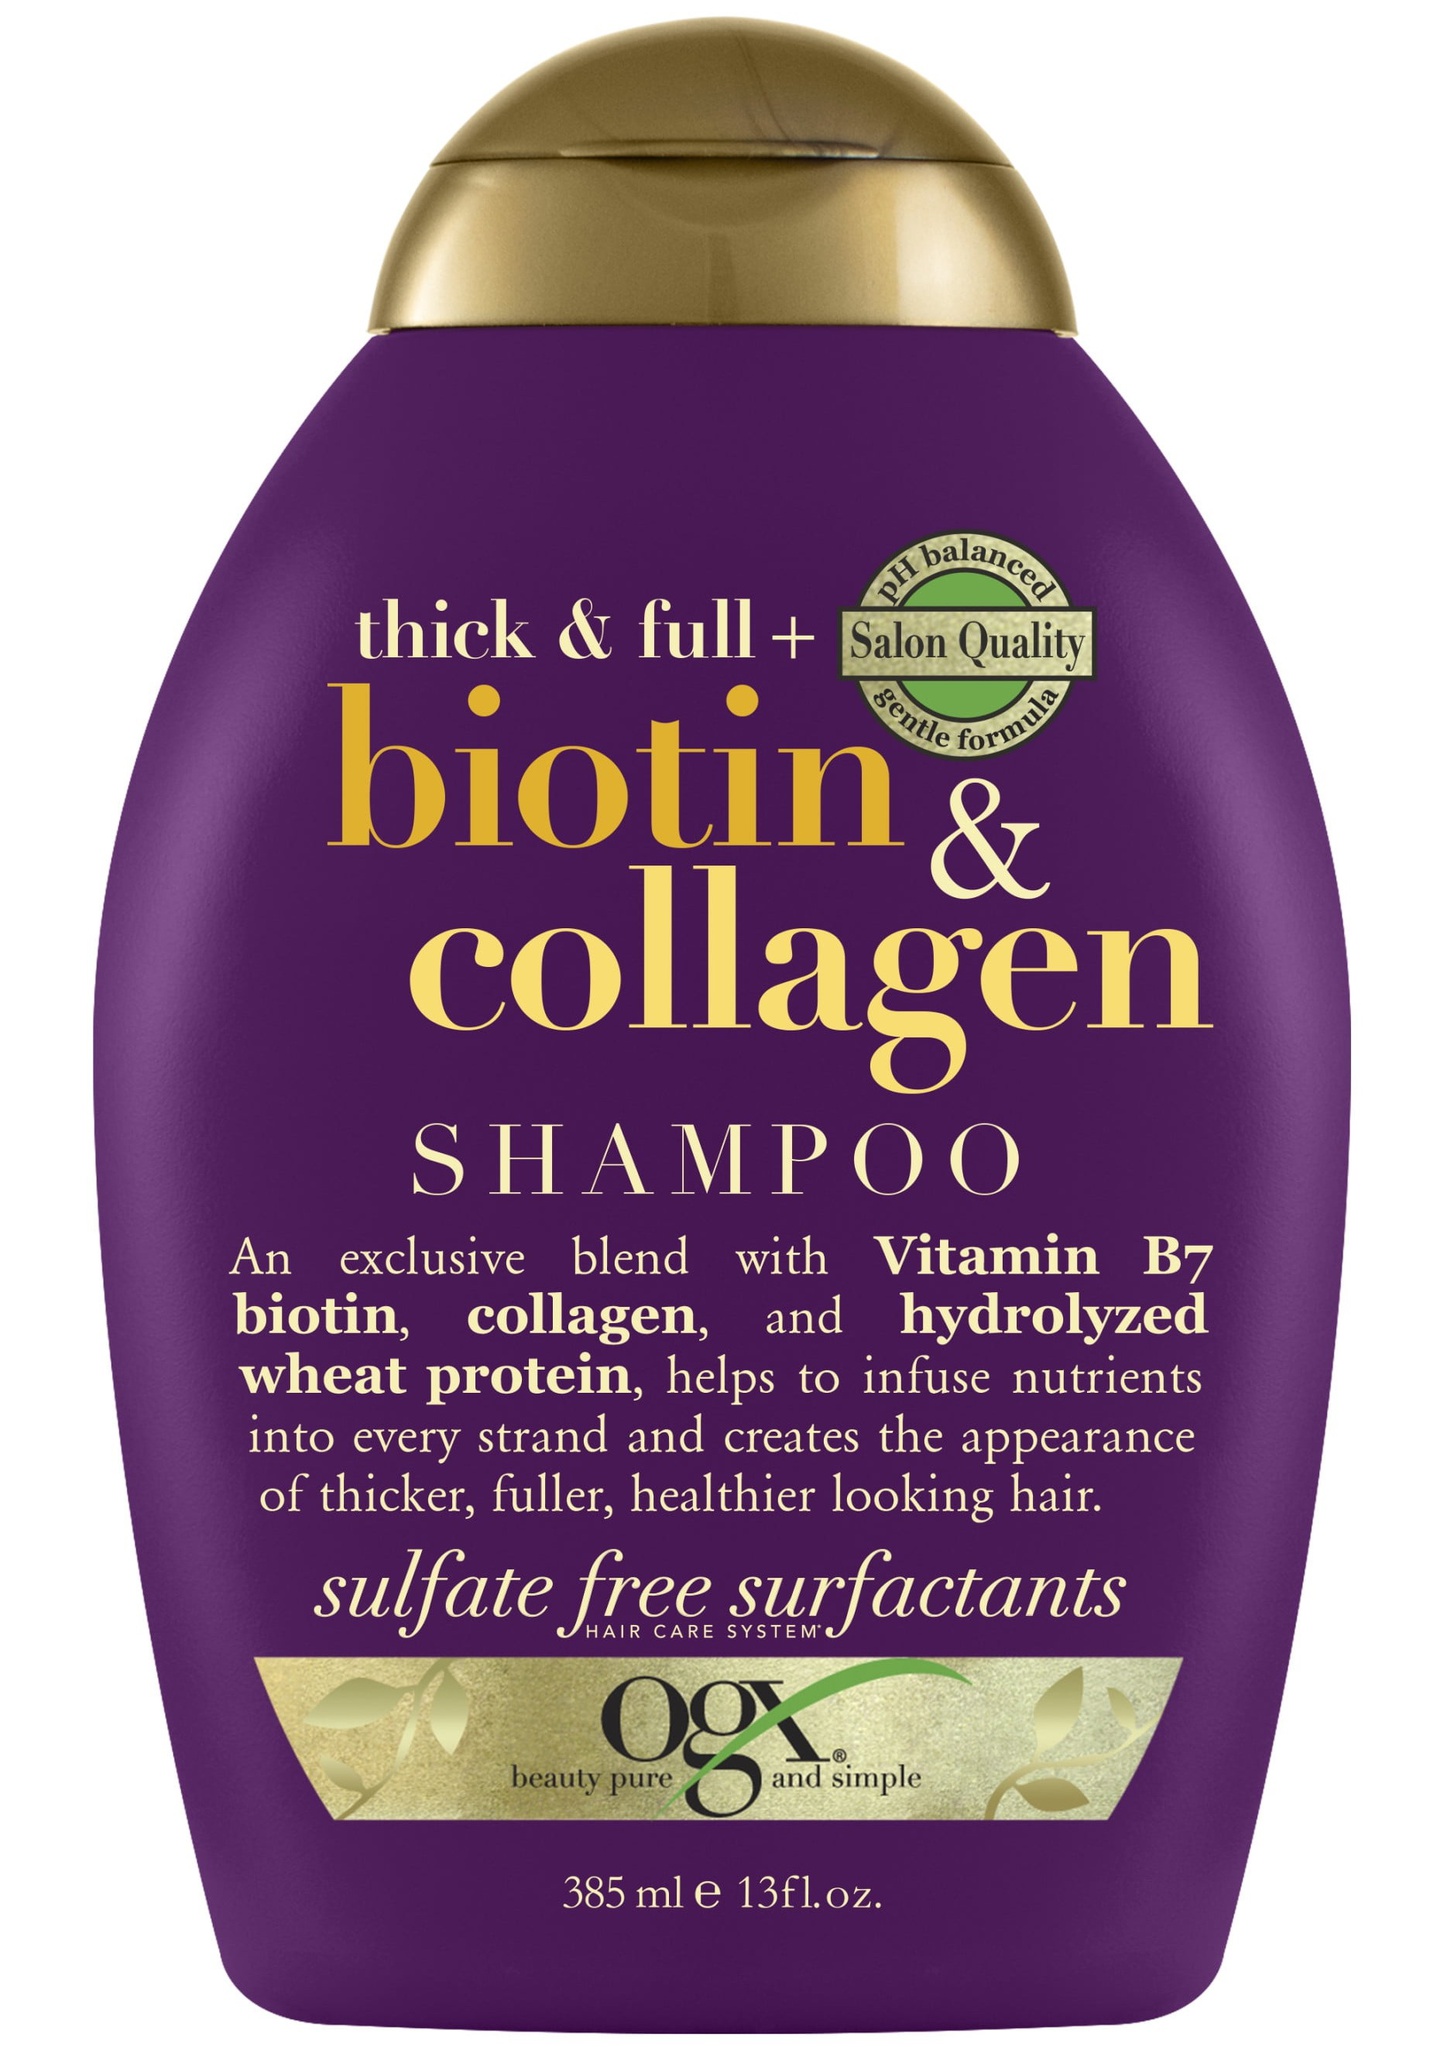 OGX Thick & Full + Volumising Biotin & Collagen Shampoo For Fine Hair